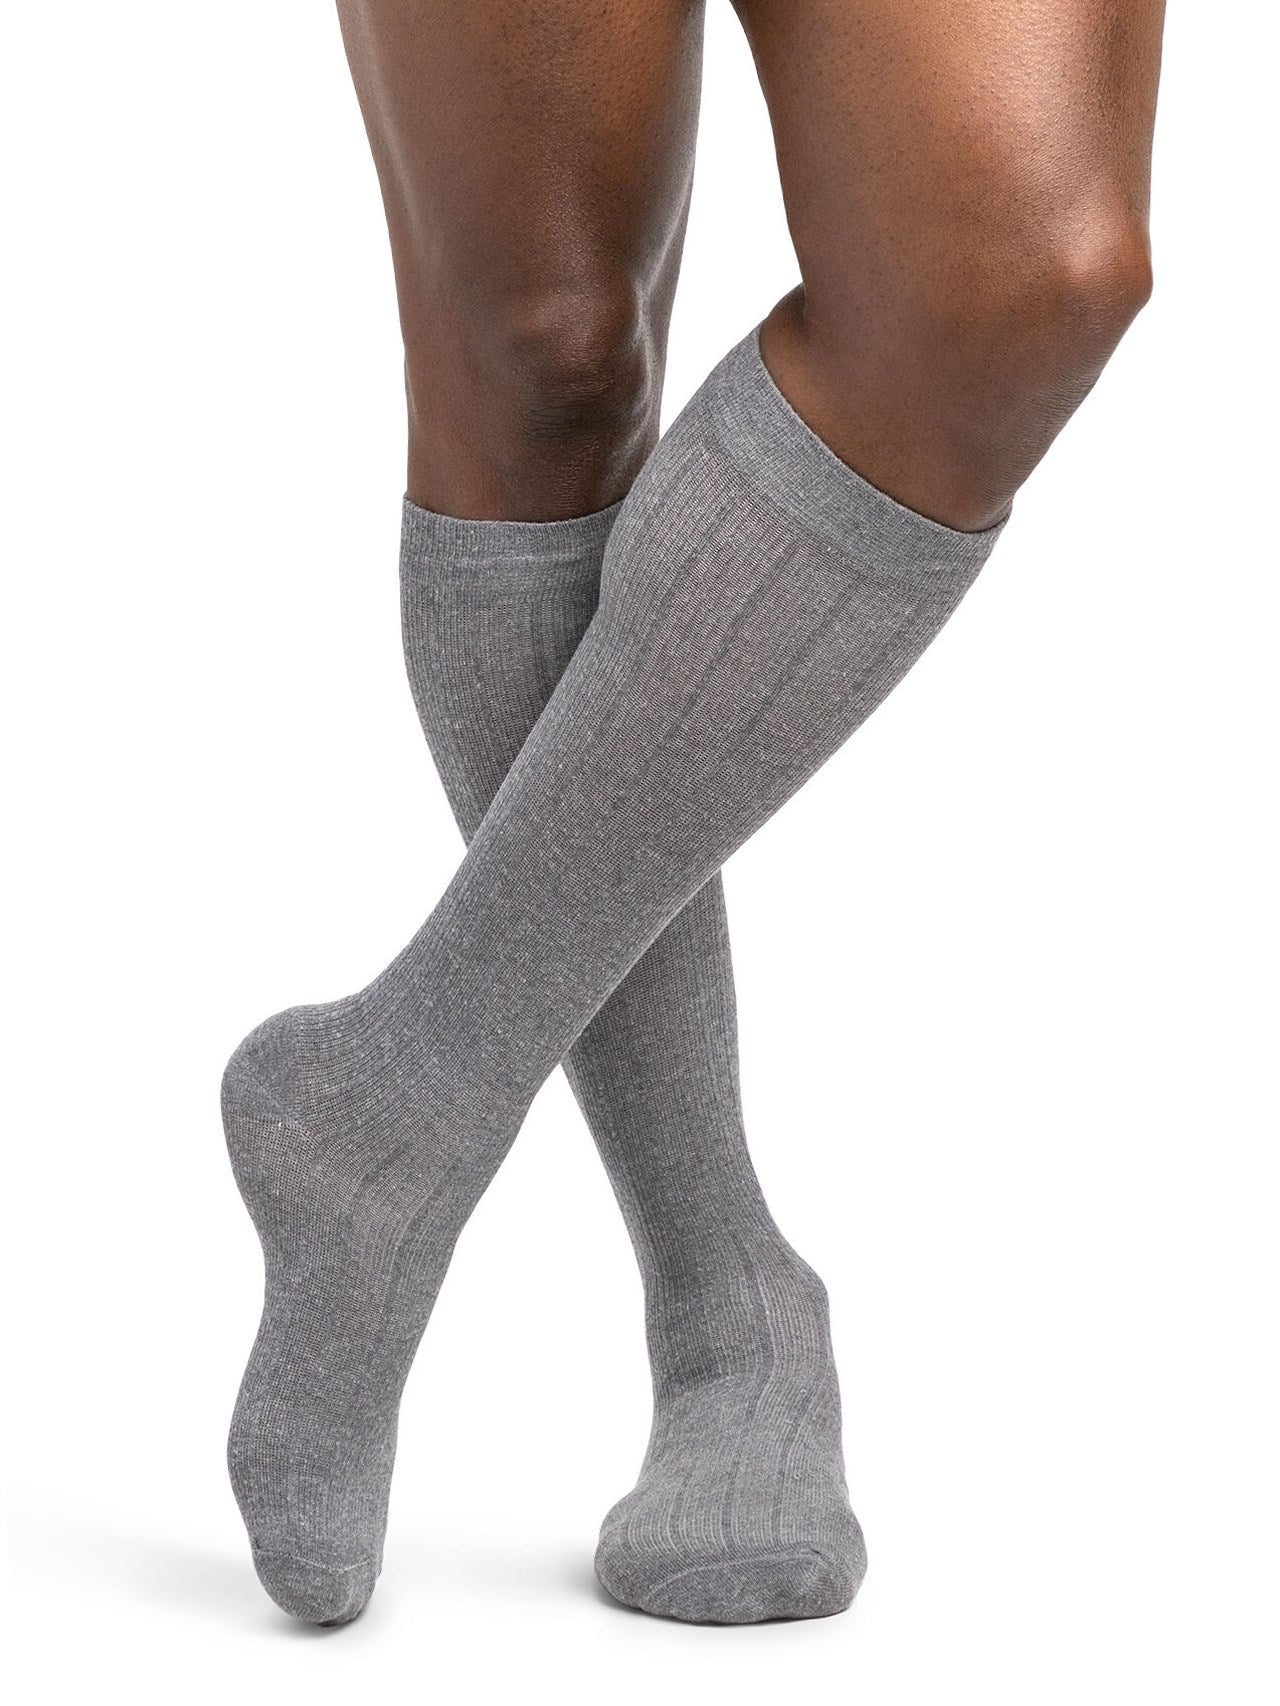 Sigvaris 190 Linen Compression Socks 15-20 mmHg Calf High For Men Closed Toe light gray 2 